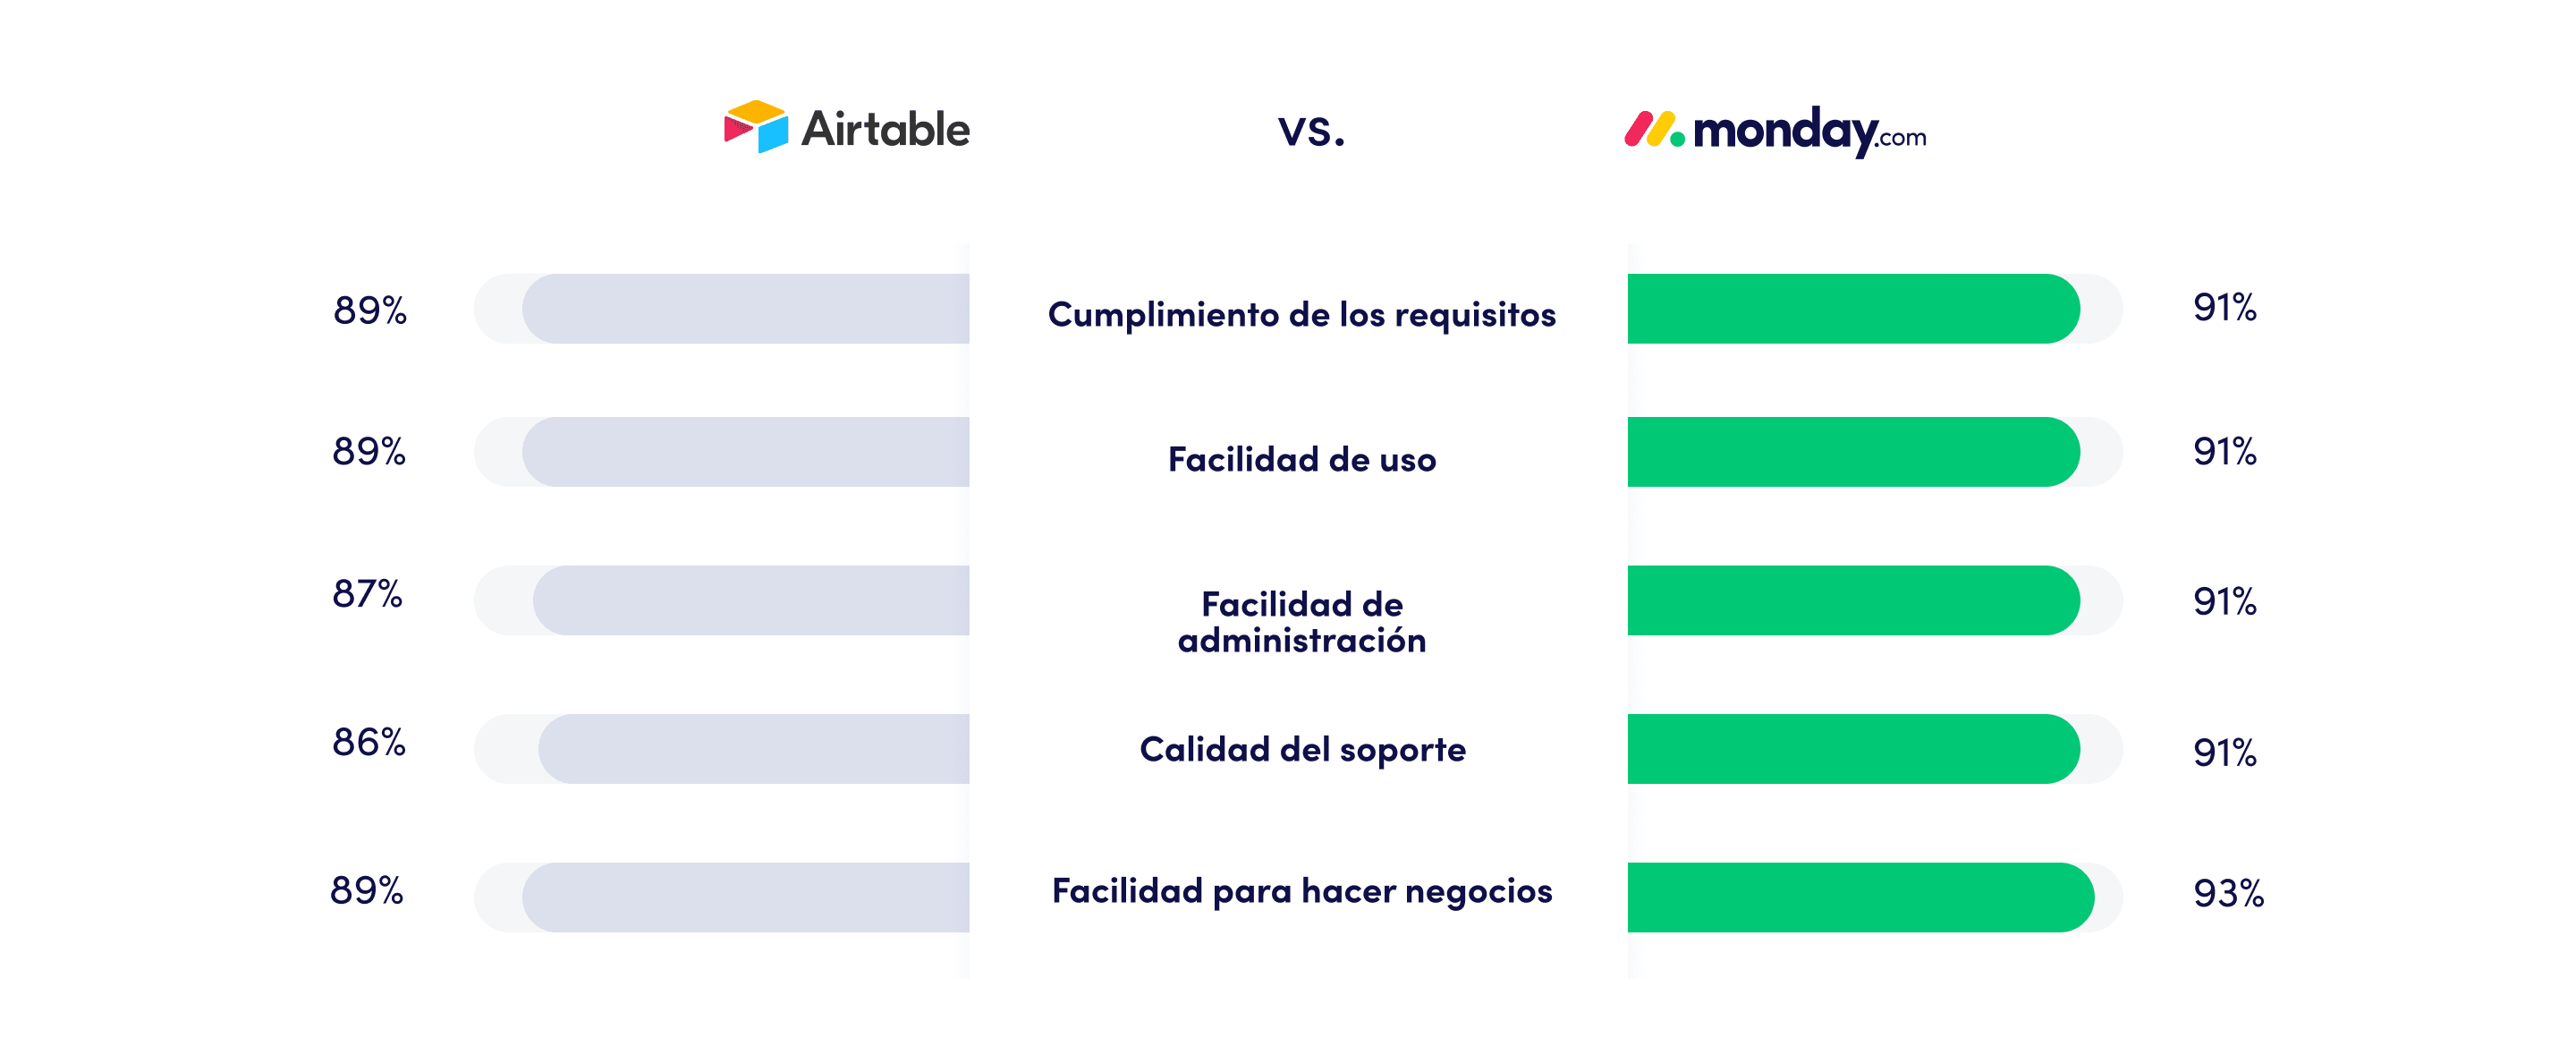 Airtable updated comparison ES